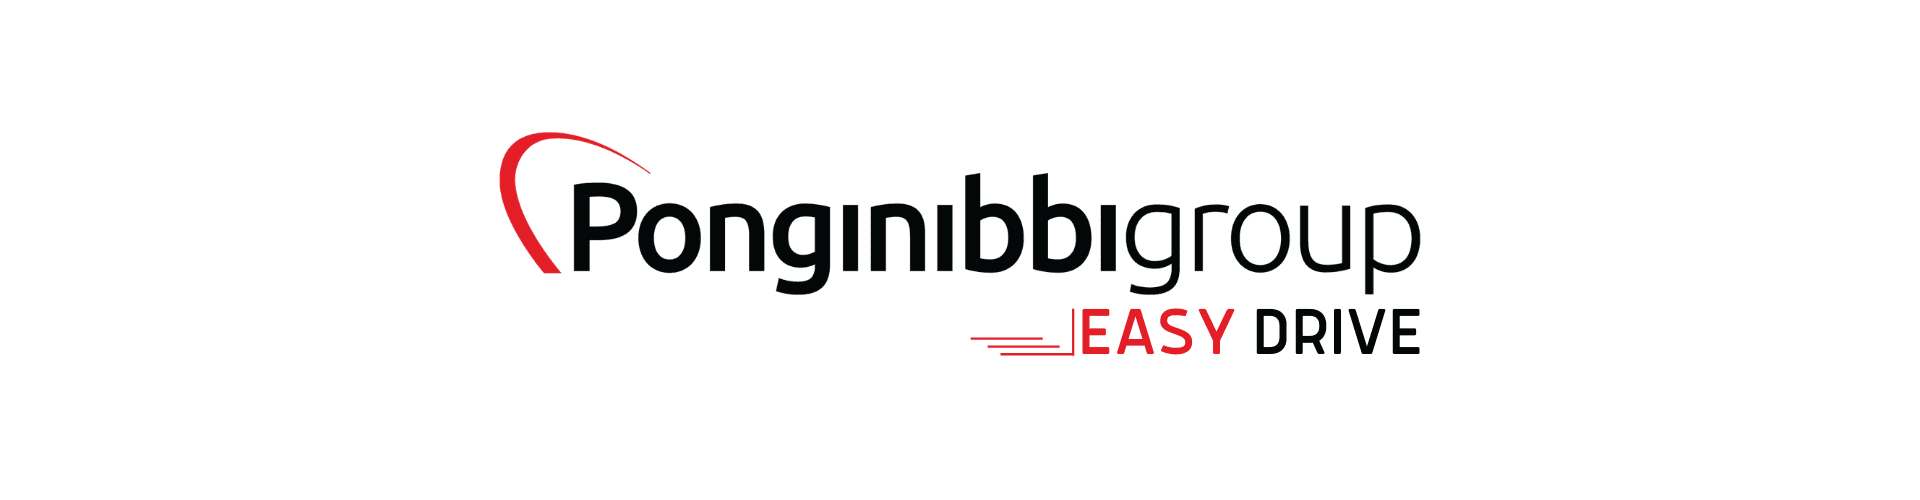 logo Ponginibbi easy drive finanziamento